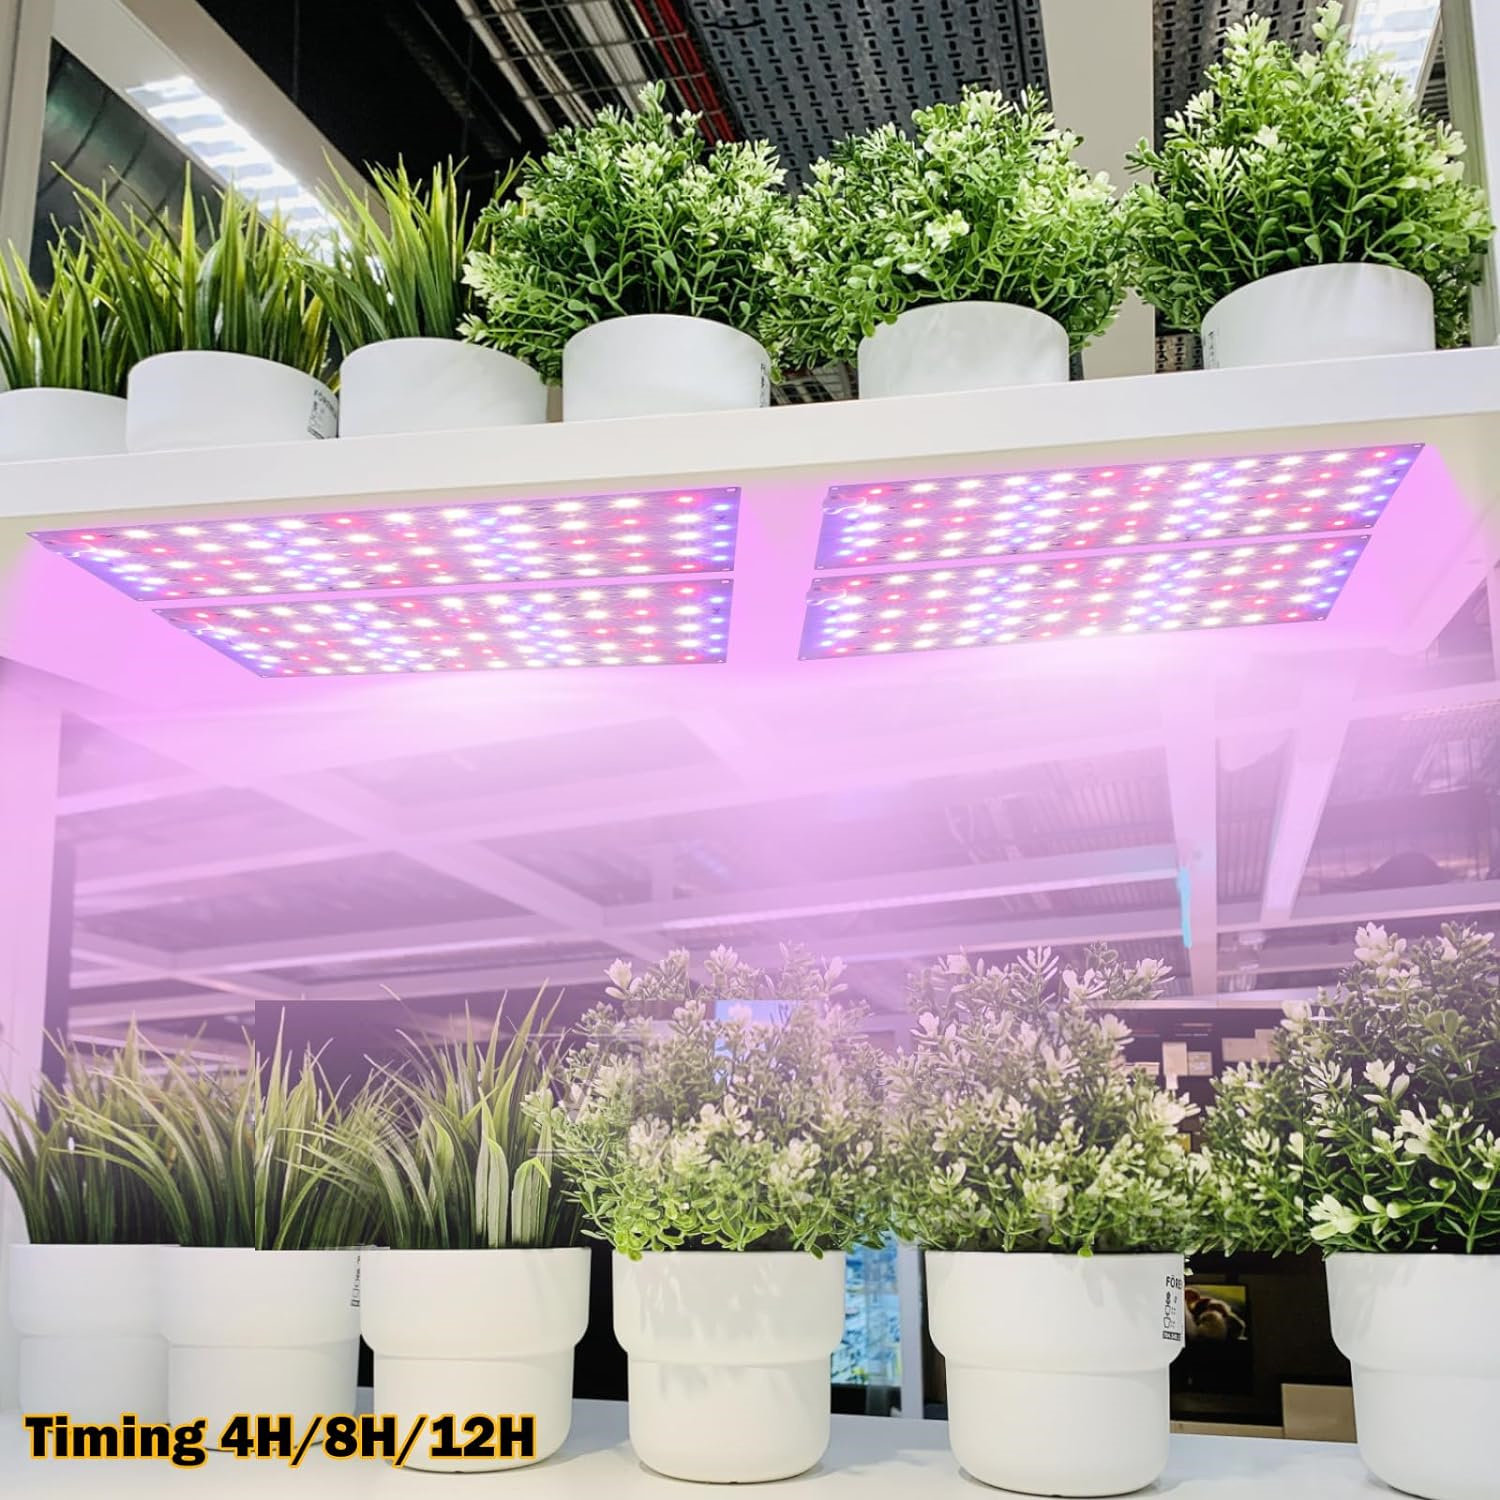 Aptoco 256 LED Grow Lights for Indoor Plants Full Spectrum Indoor Plants Grow  Lights with Hook